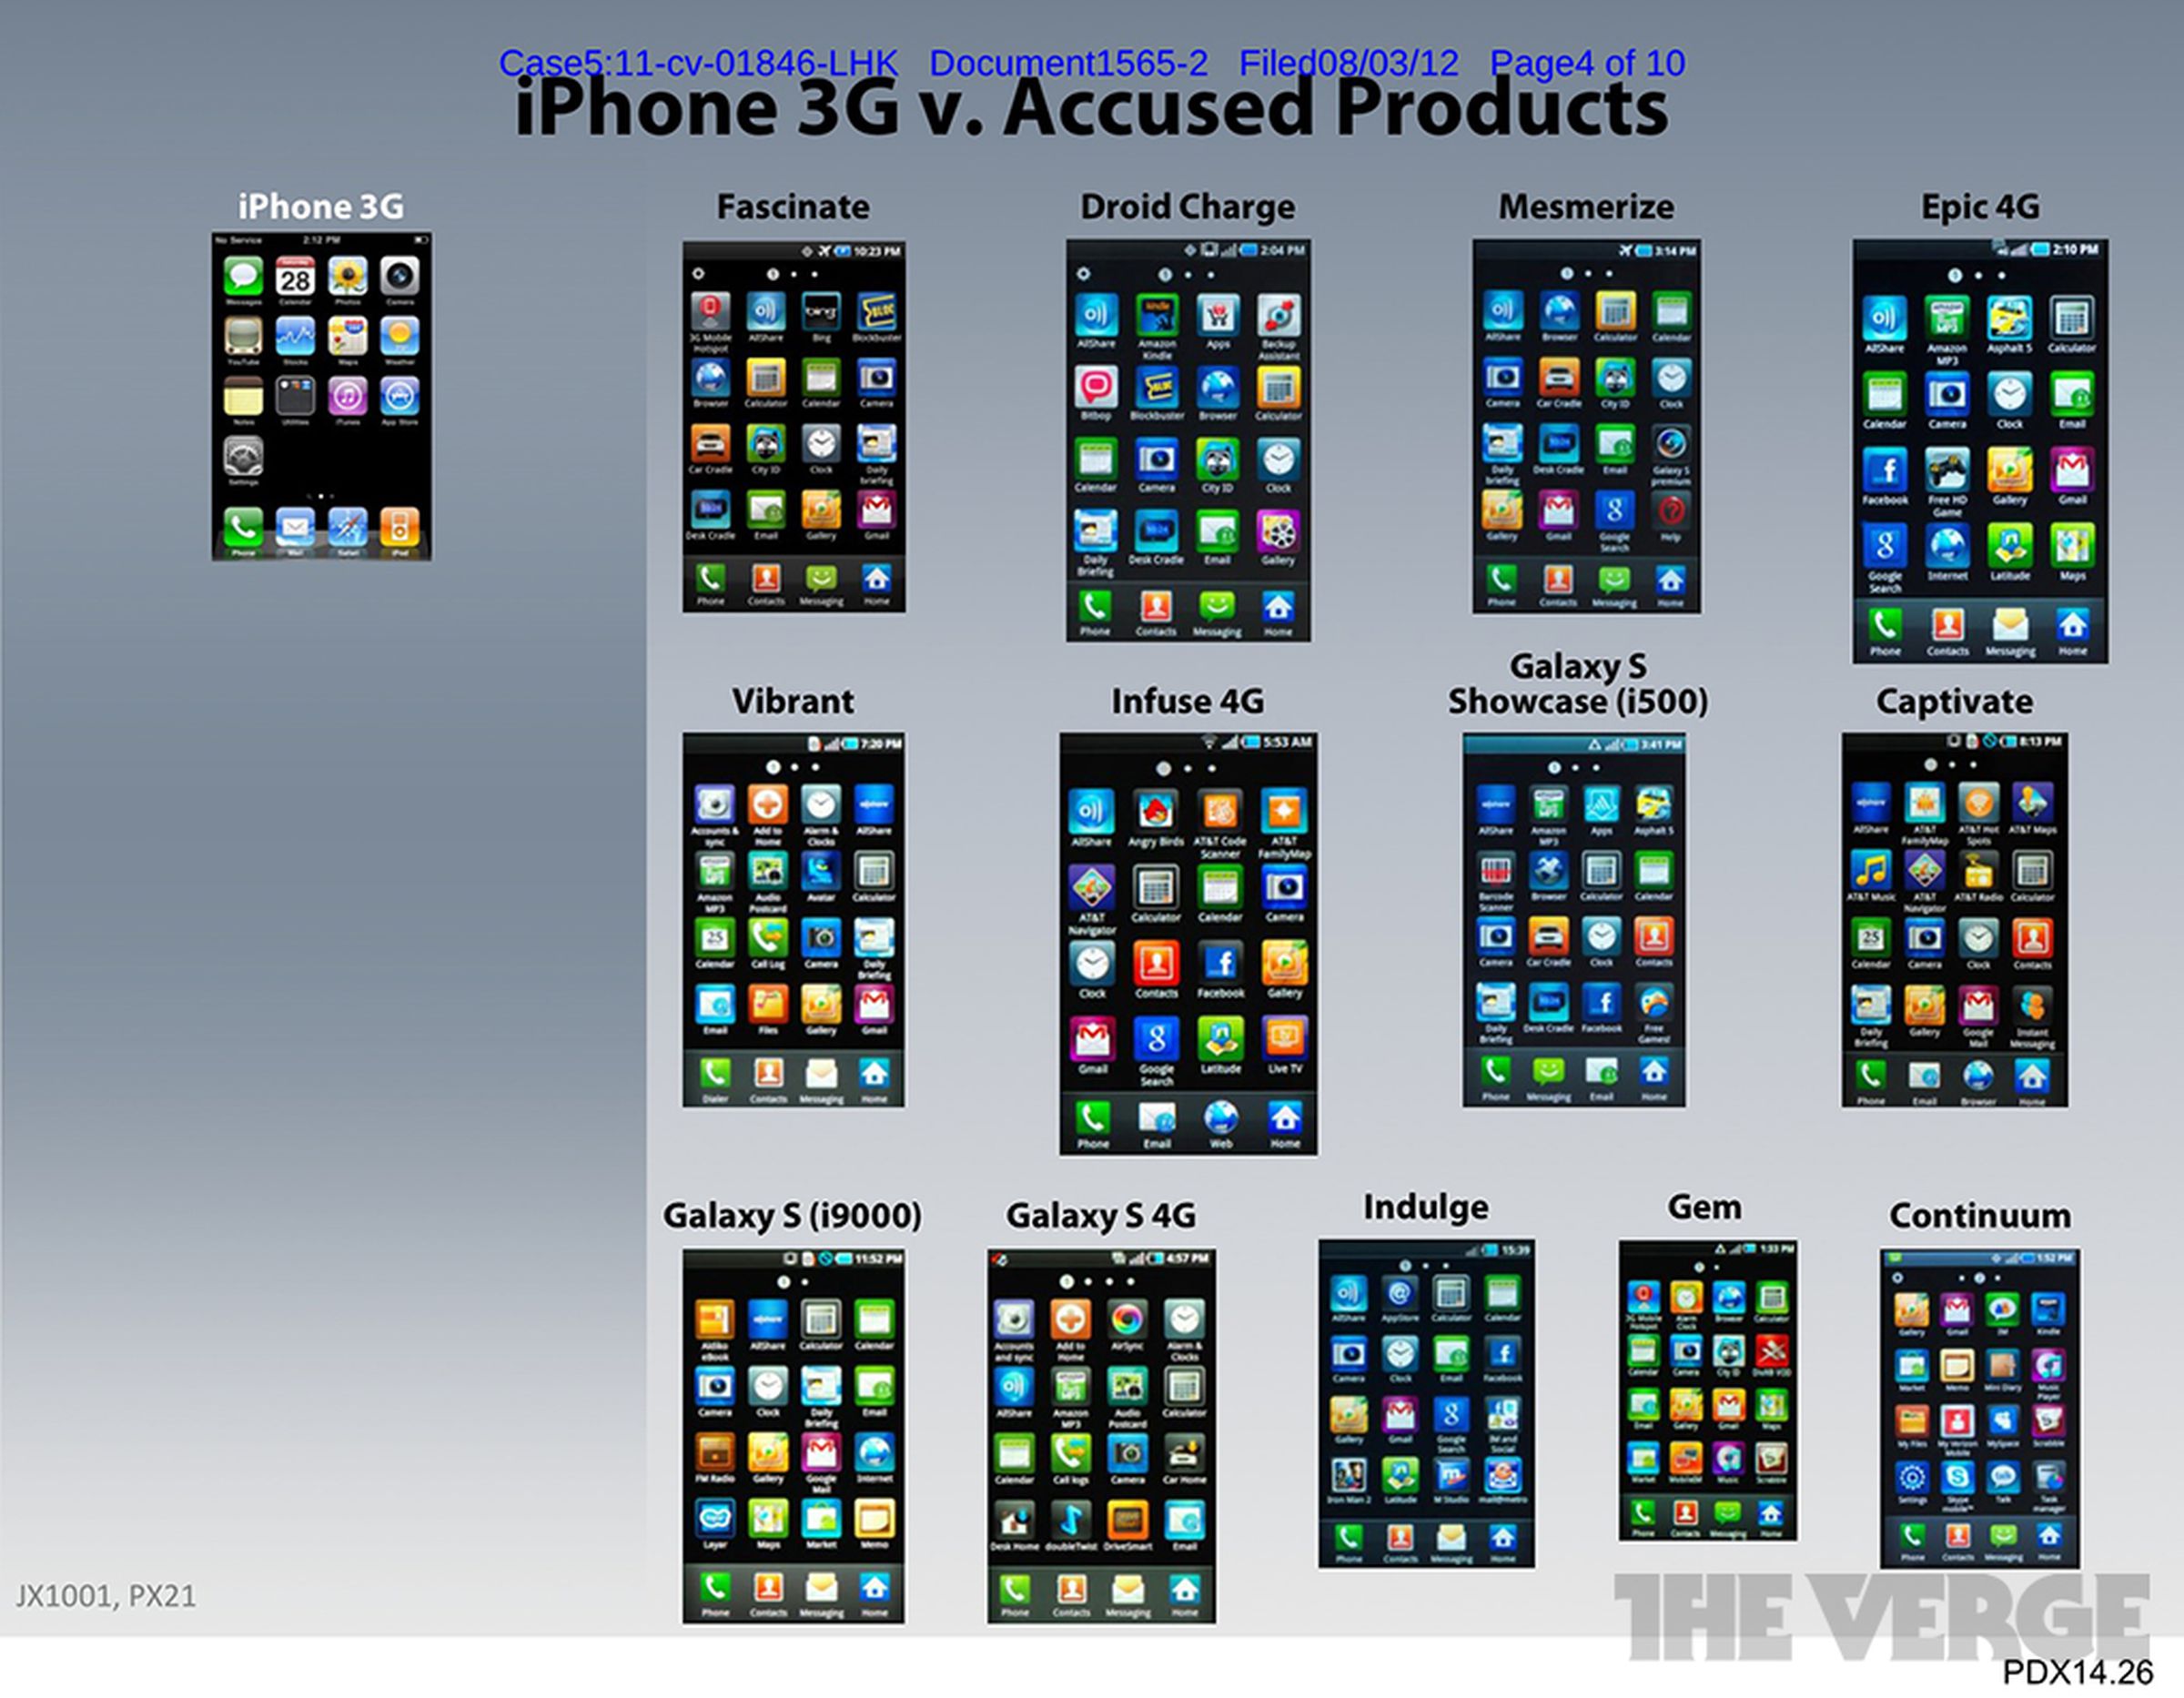 Apple v. Samsung trial evidence: August 7th, 2012